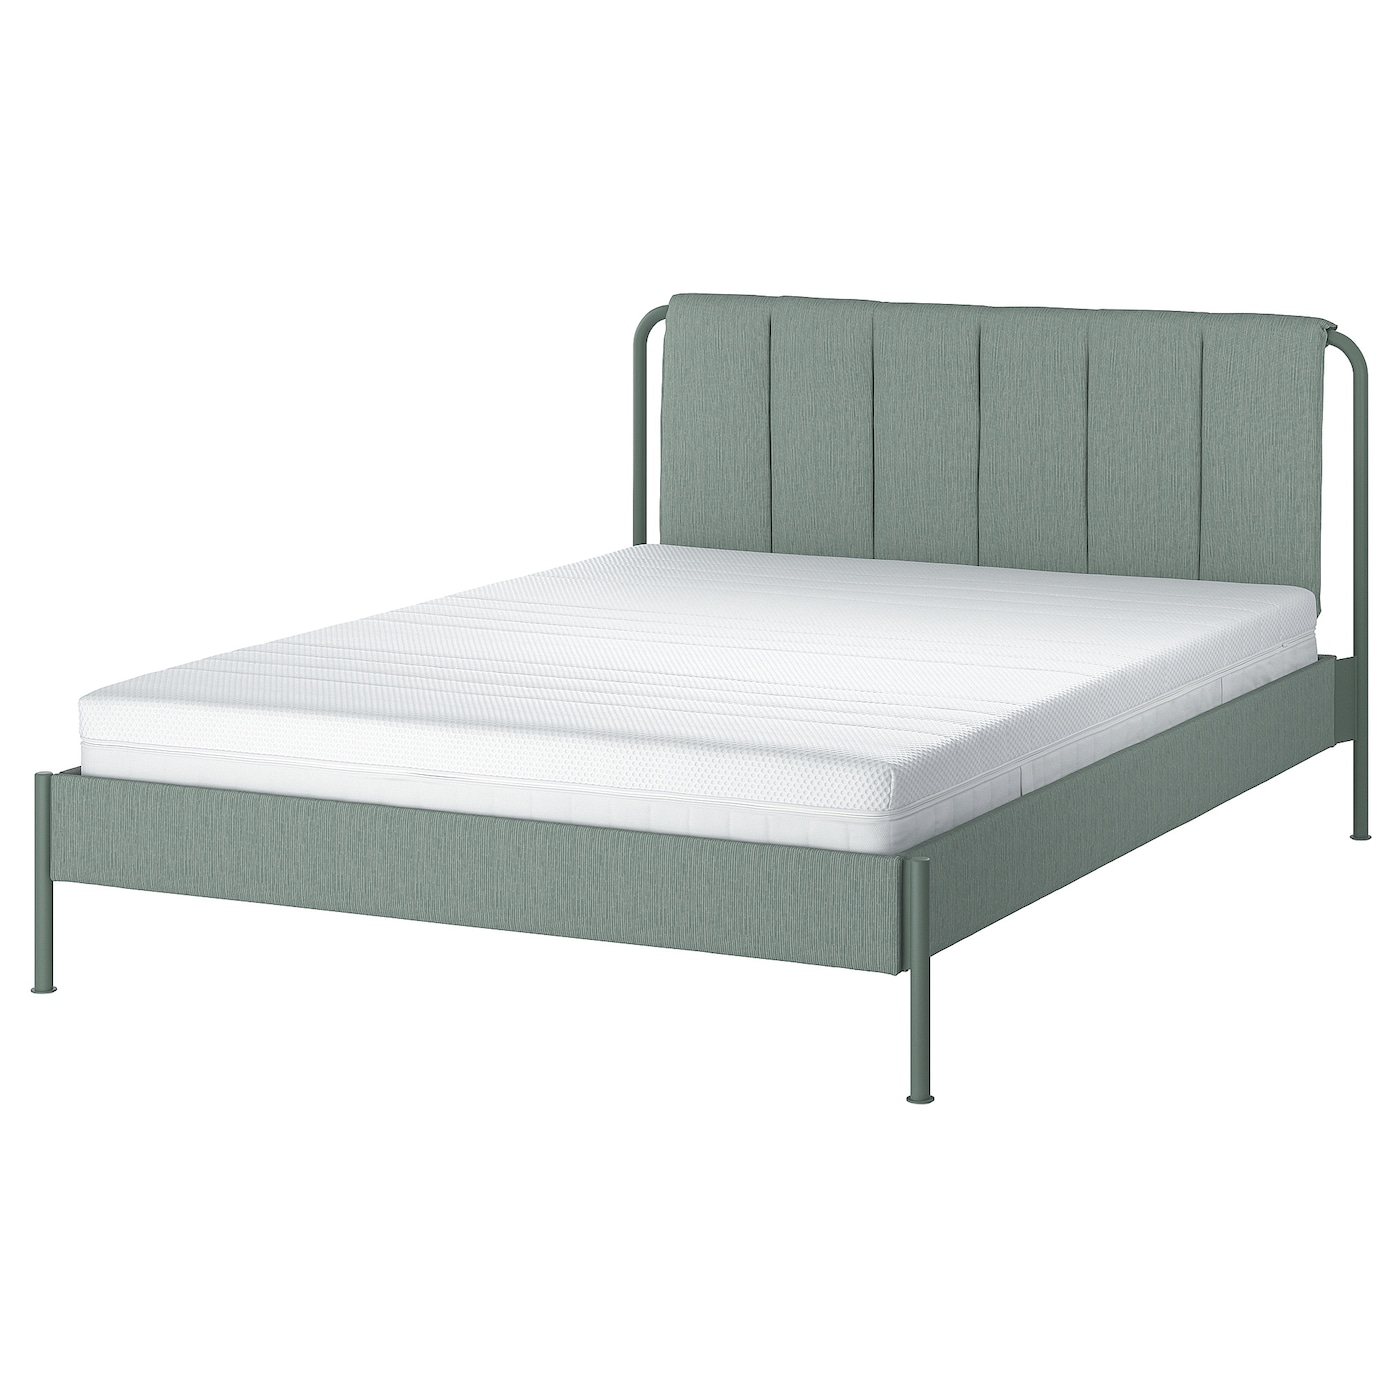 Каркас кровати мягкий с матрасом - IKEA TÄLLÅSEN/TALLASEN, 200х160 см, матрас средне-жесткий, серо-зеленый, ТЭЛЛАСОН ИКЕА